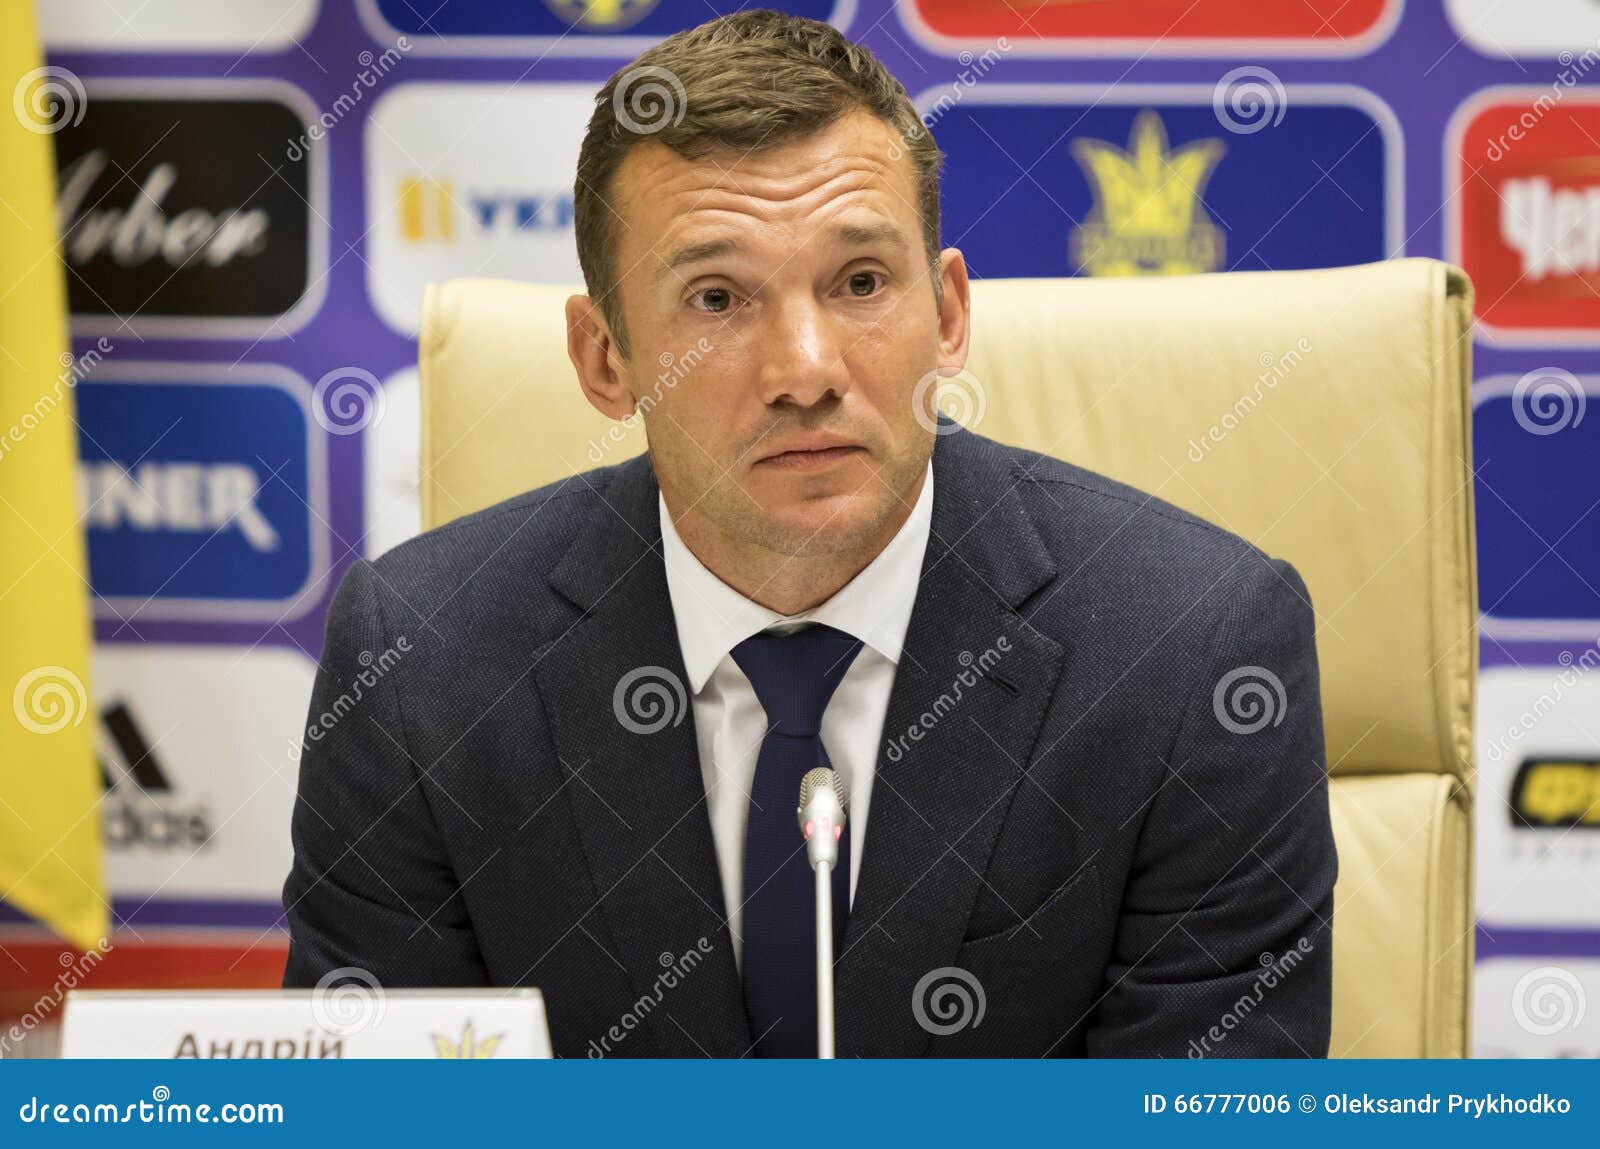 Coach ukraine EURO 2020: